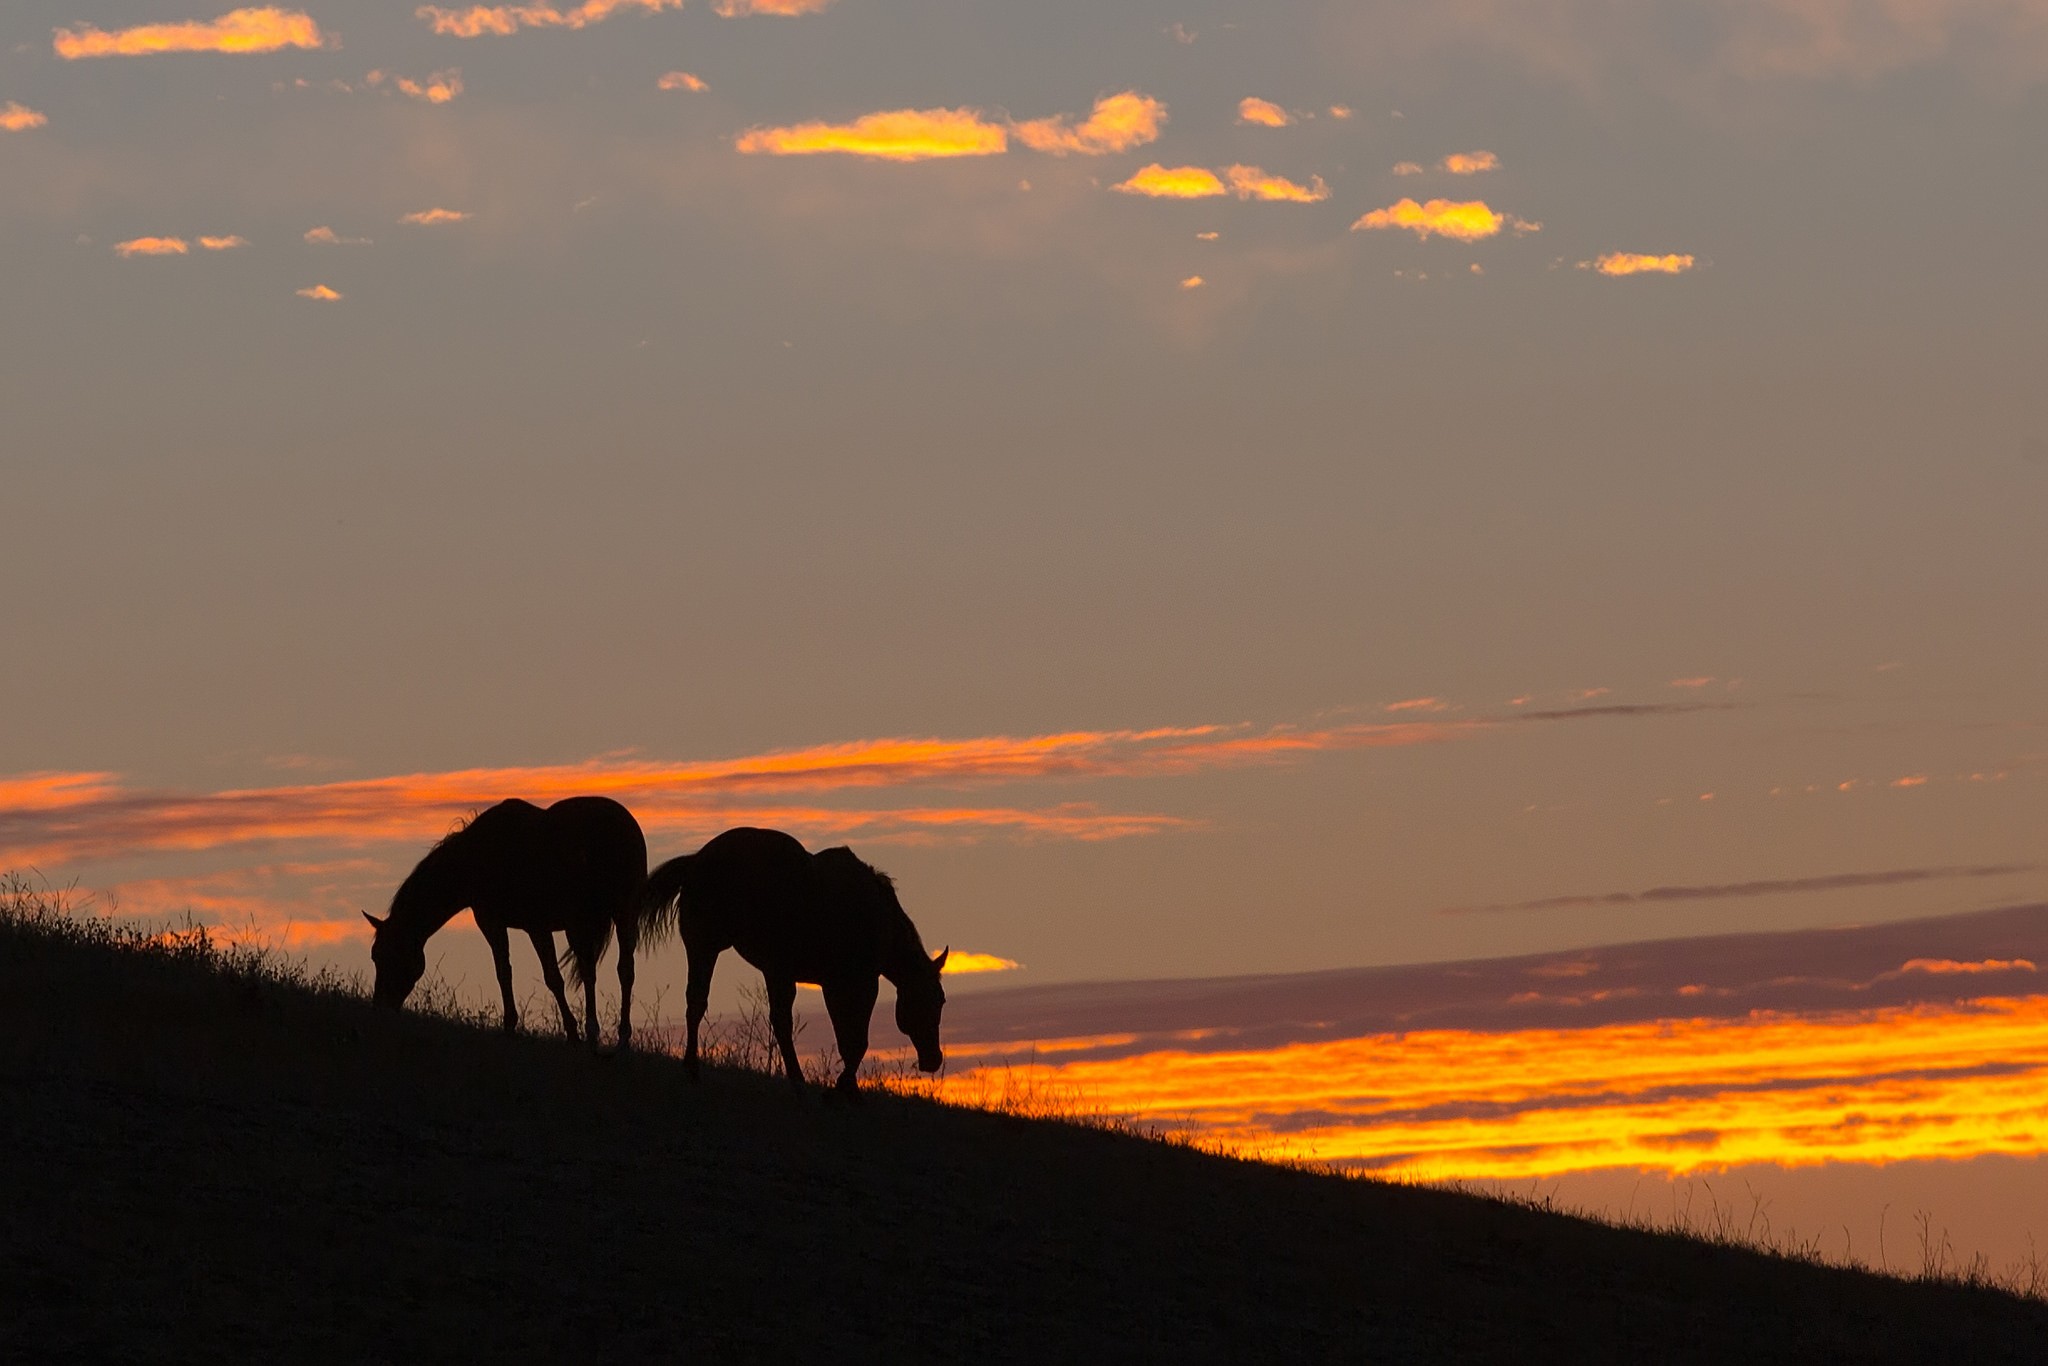 General 2048x1366 landscape animals horse silhouette mammals sky sunlight outdoors